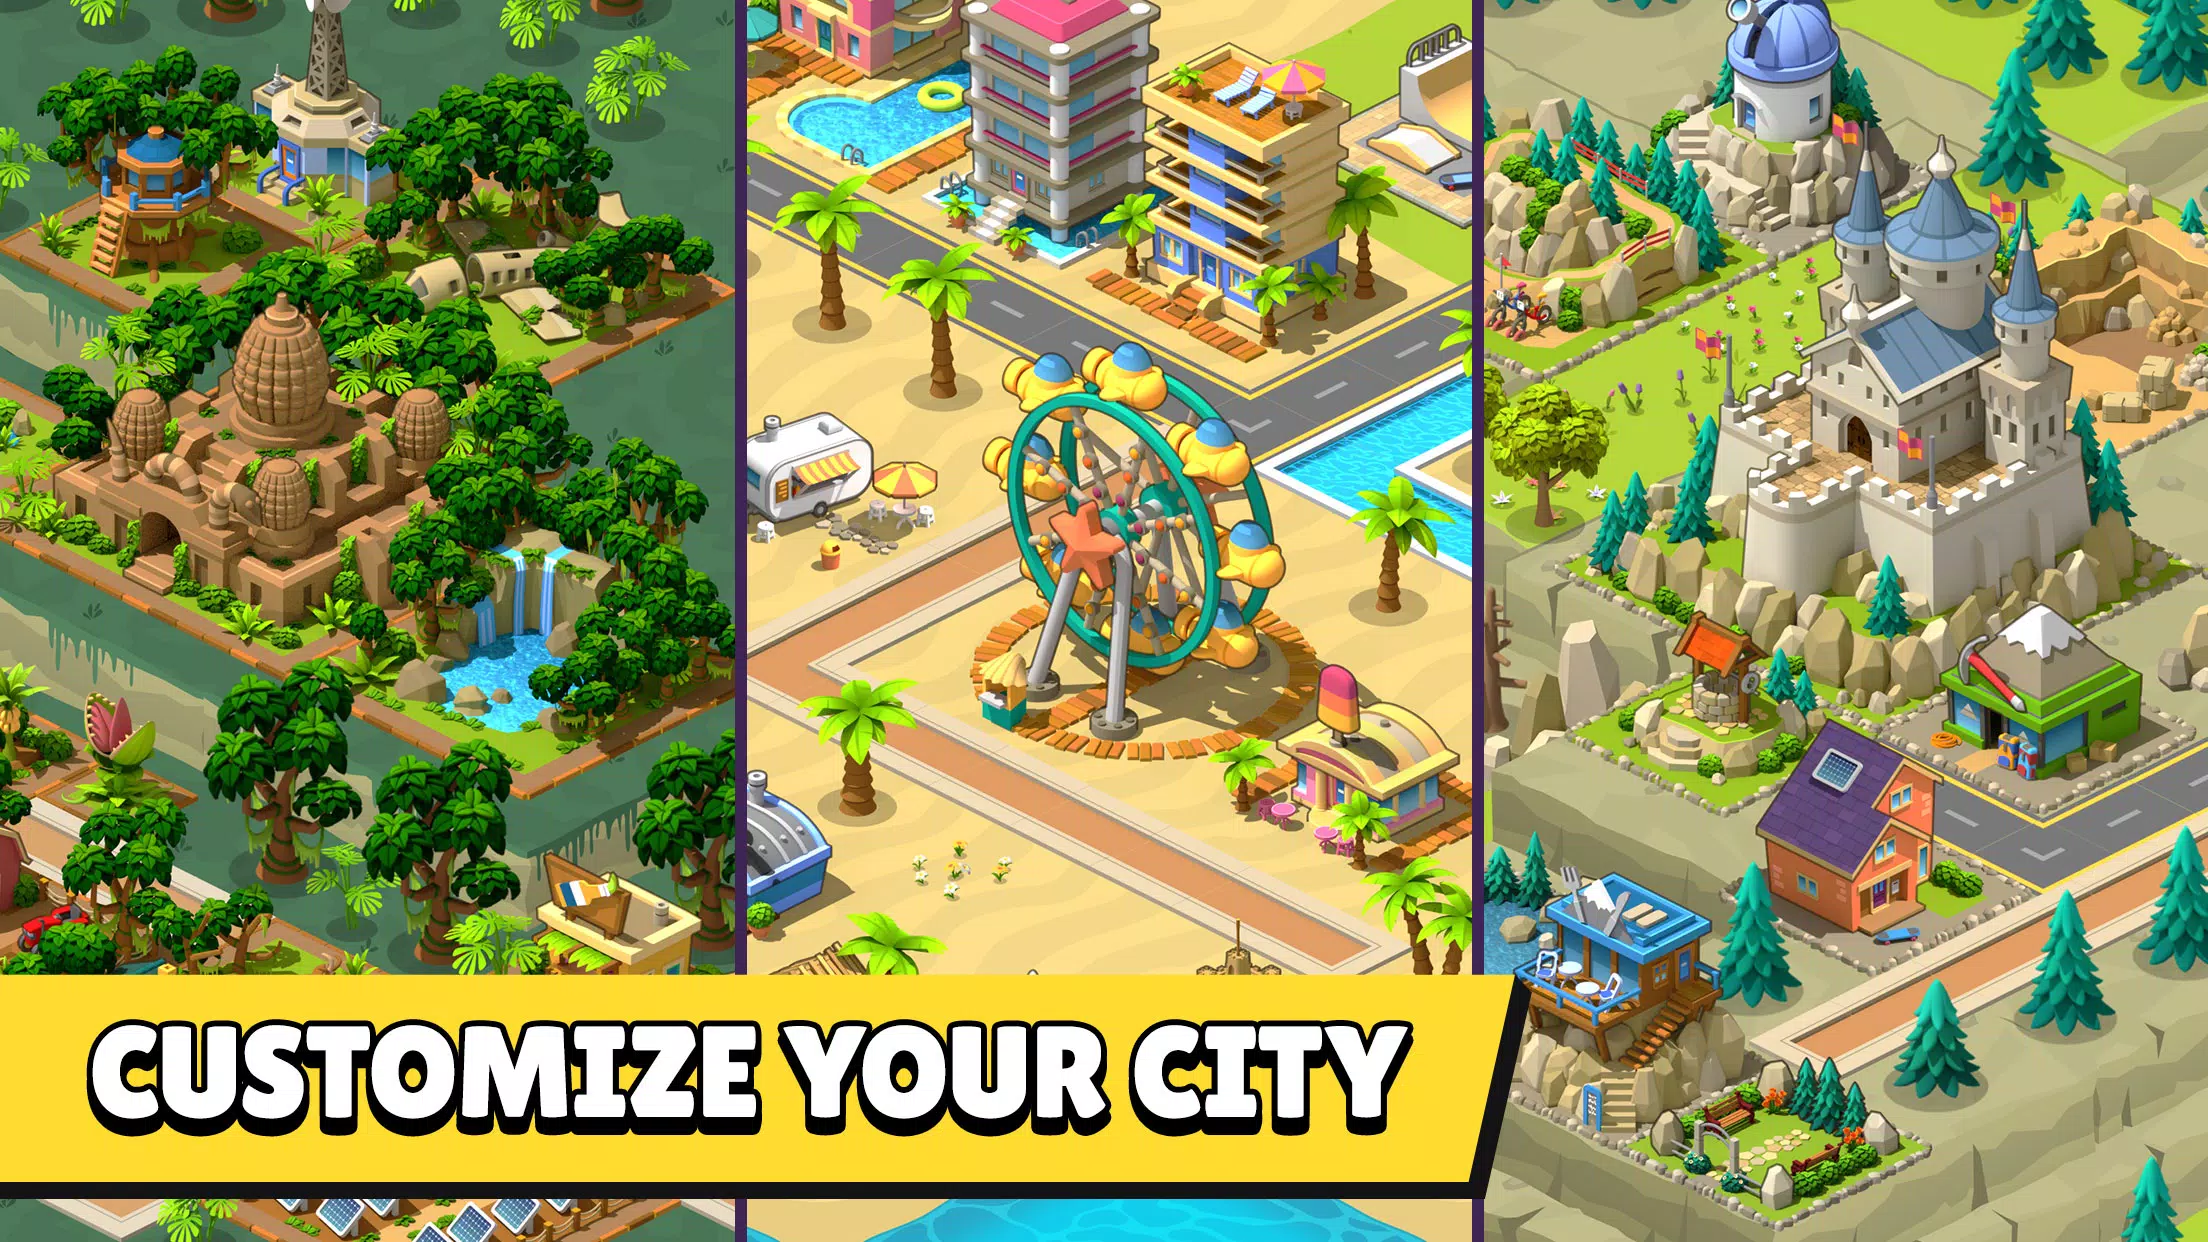 Baixar Town City - Village Building Sim Paradise - Microsoft Store